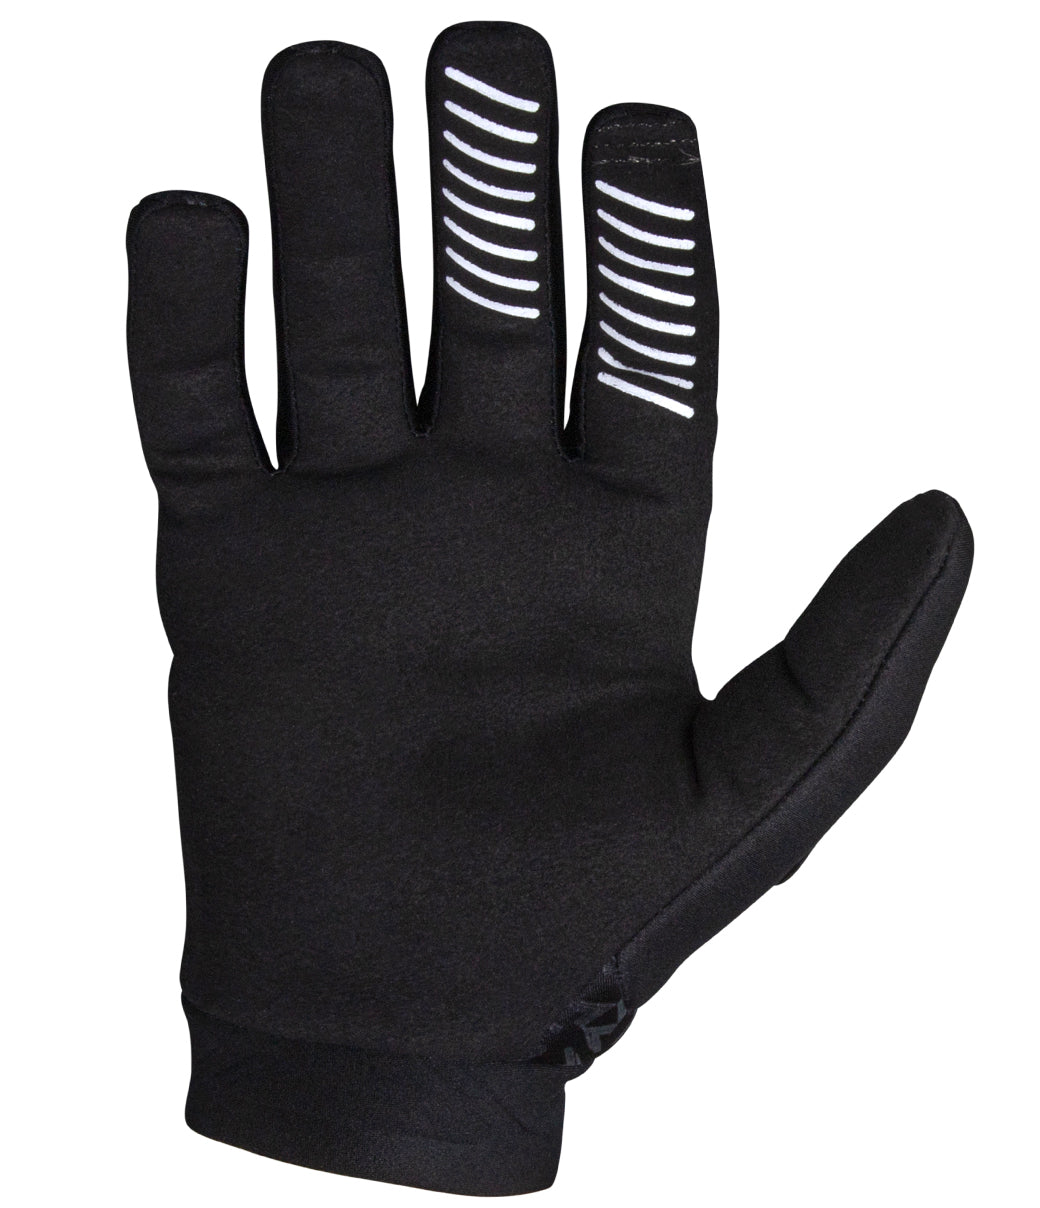 Zero WP Glove - Black